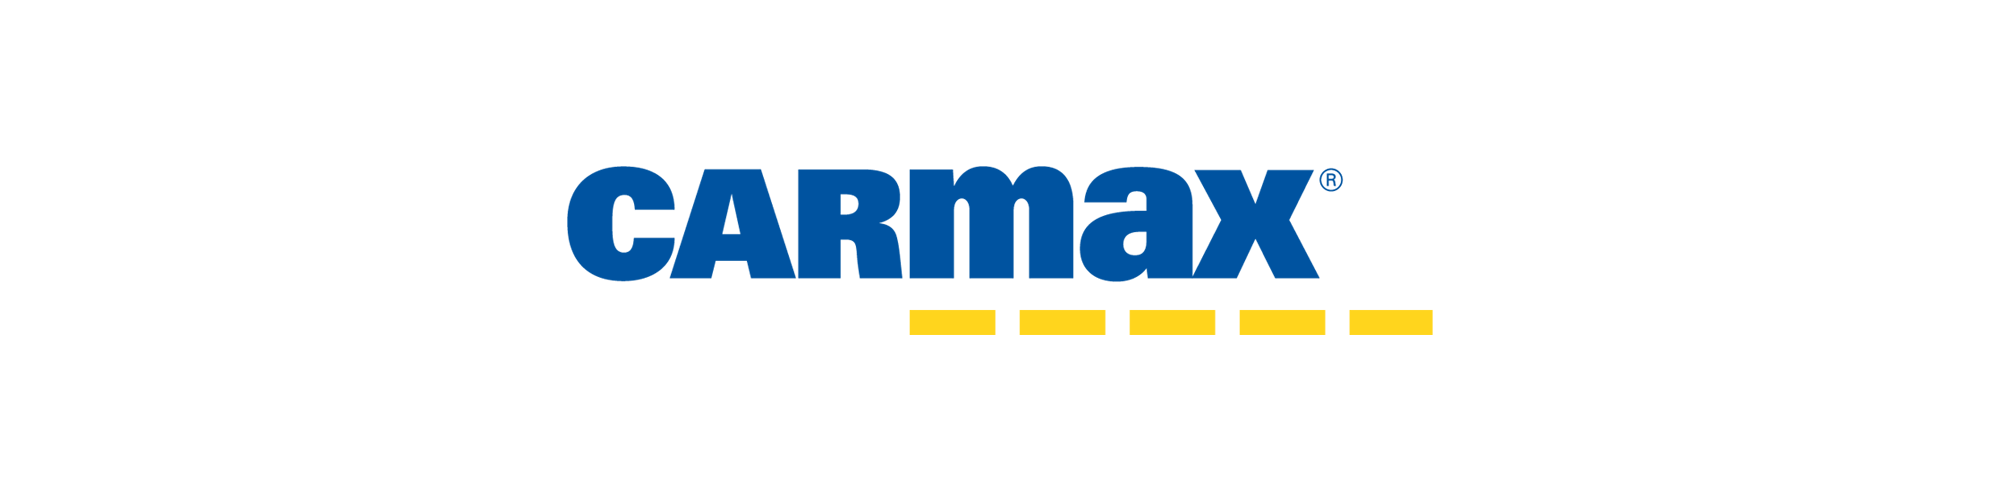 Carmax Logo PNG - 107321